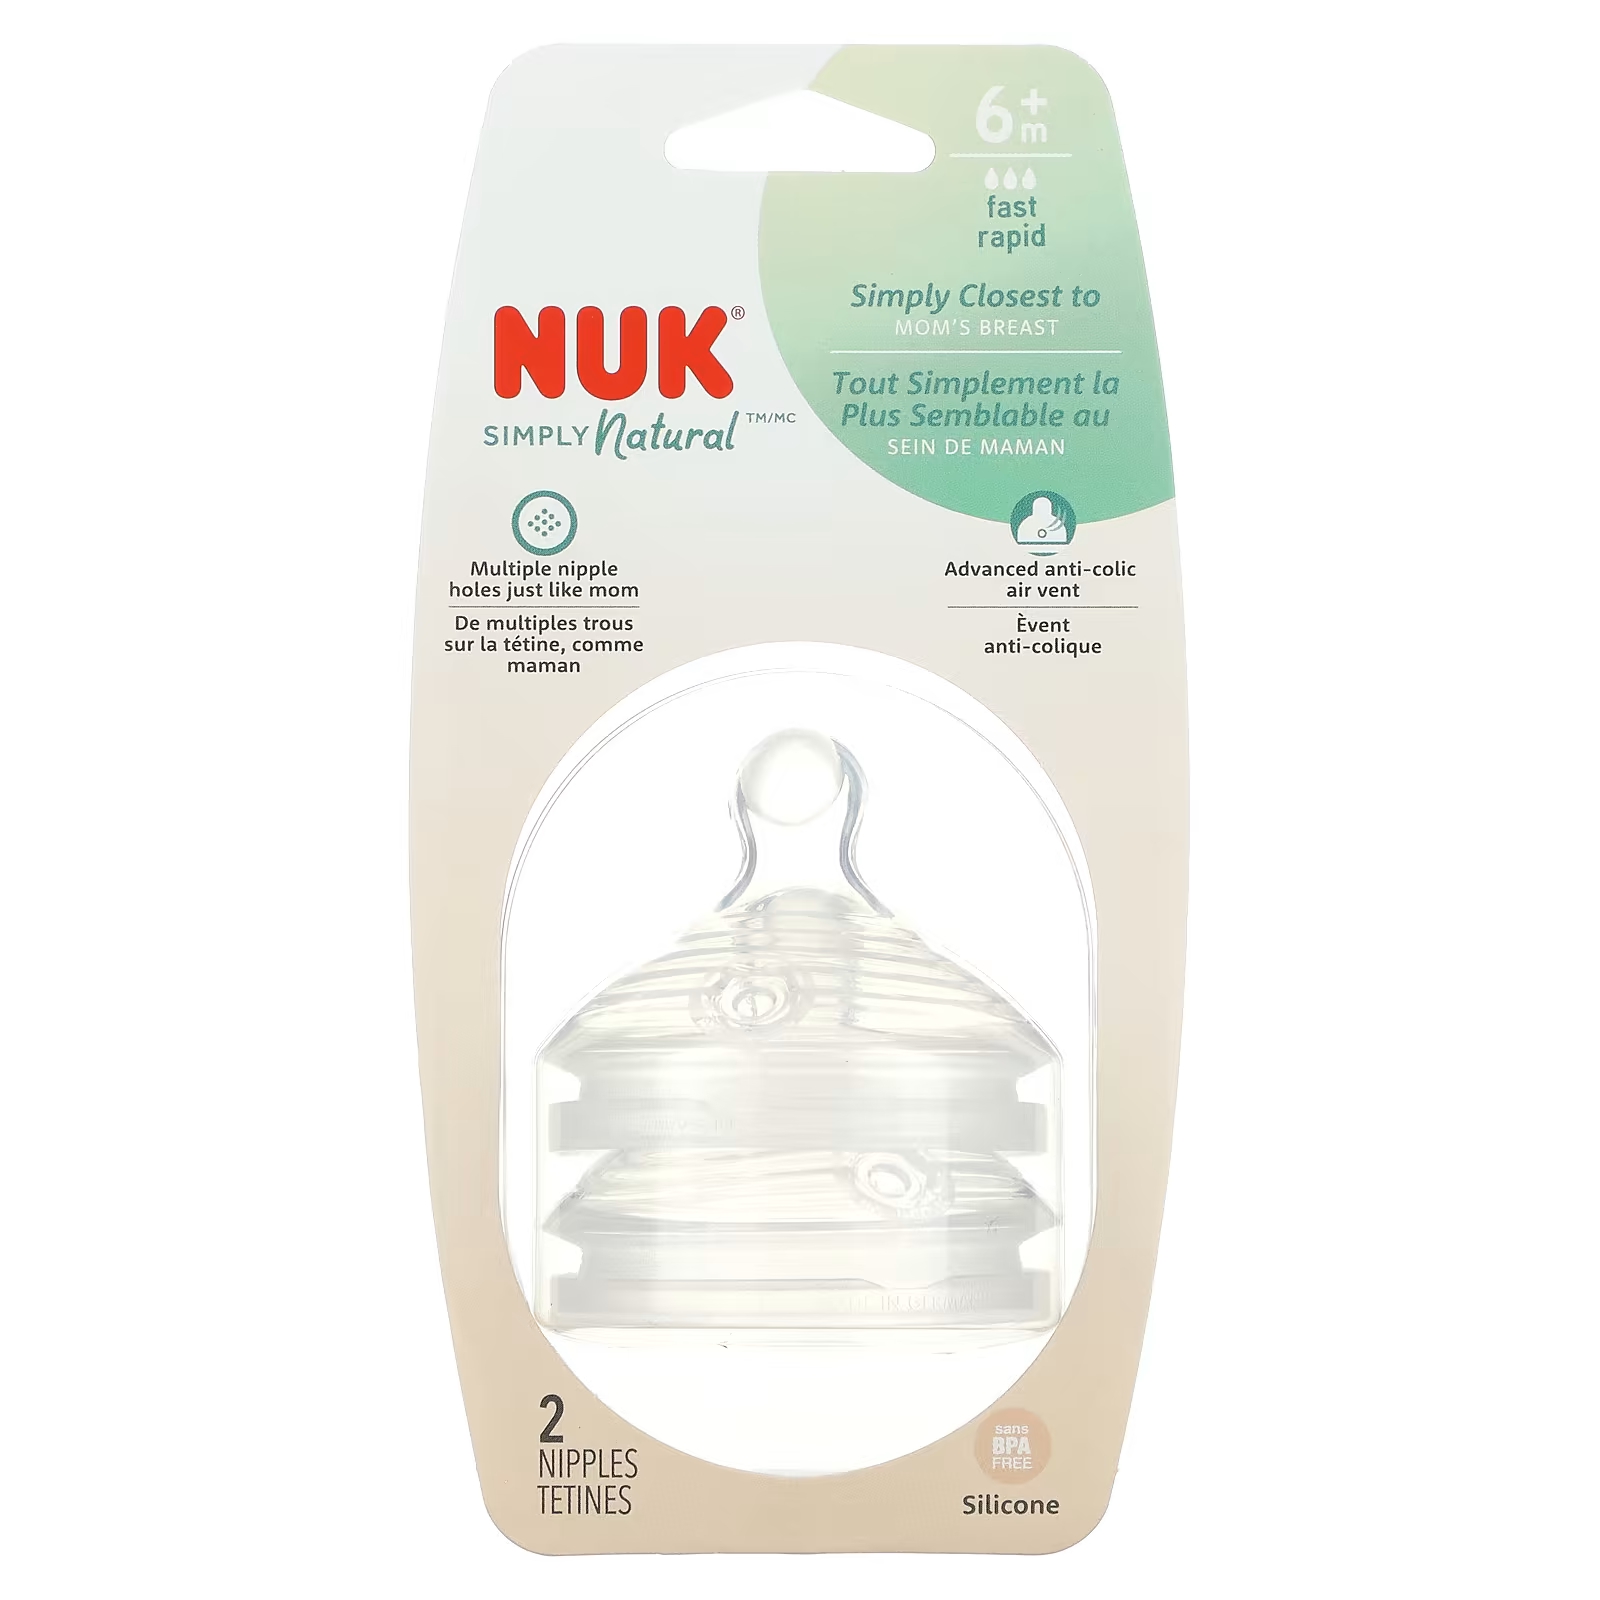 Соски NUK Simply Natural от 6 месяцев nuk simply natural соски от 6 месяцев быстрое течение 2 соски